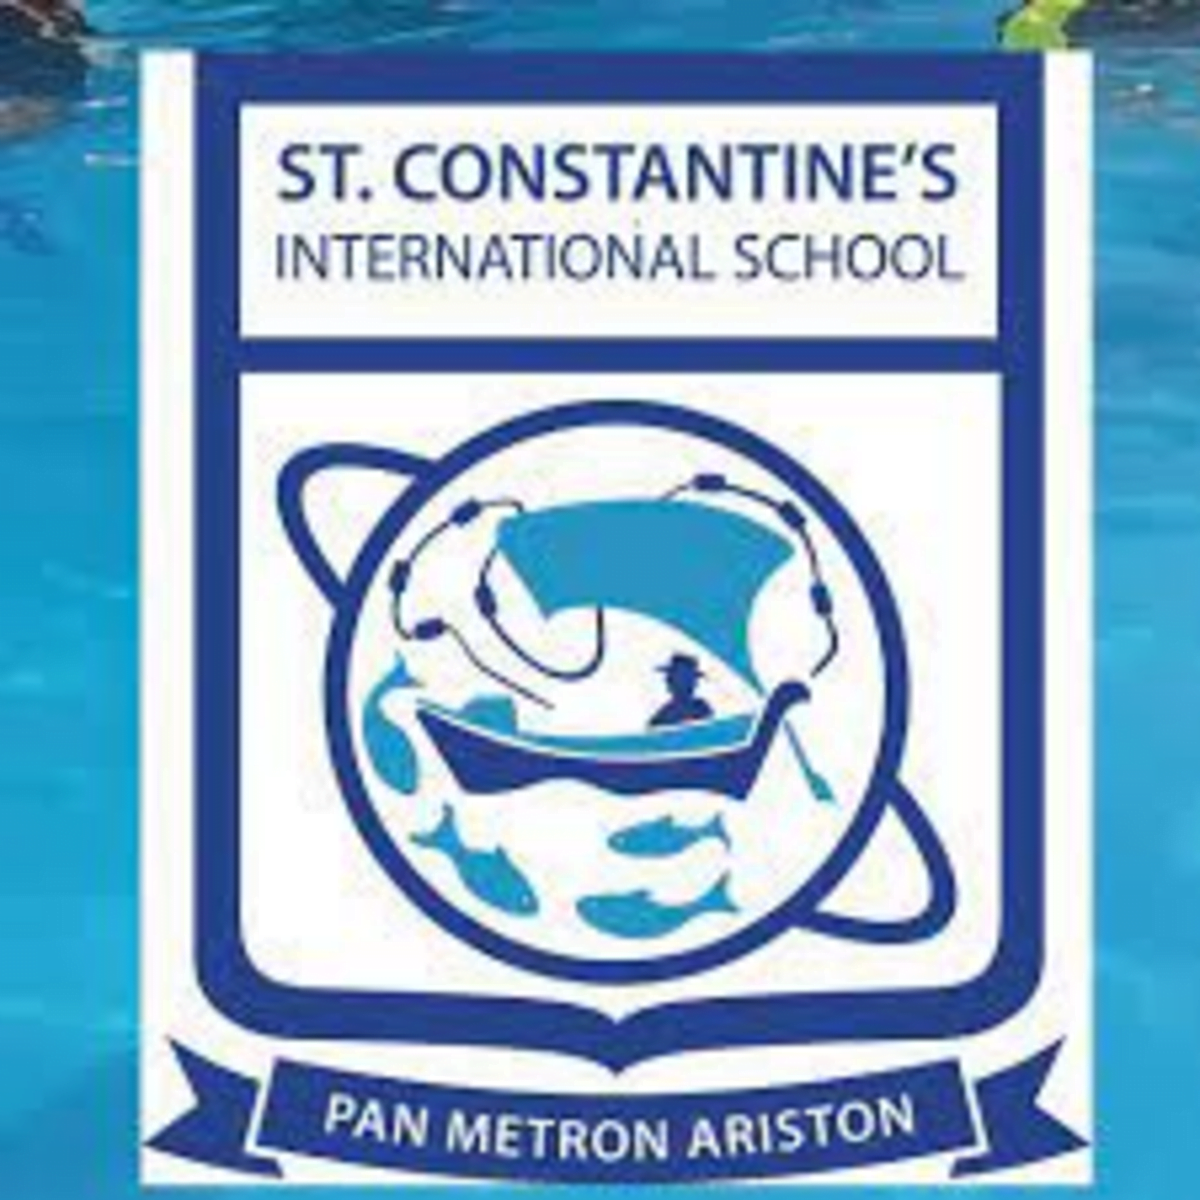 St Constantine's International School vacancies, St constantine International School scholarship, St constantine International School fees, Saint Constantine School, St constantine's International School Calendar